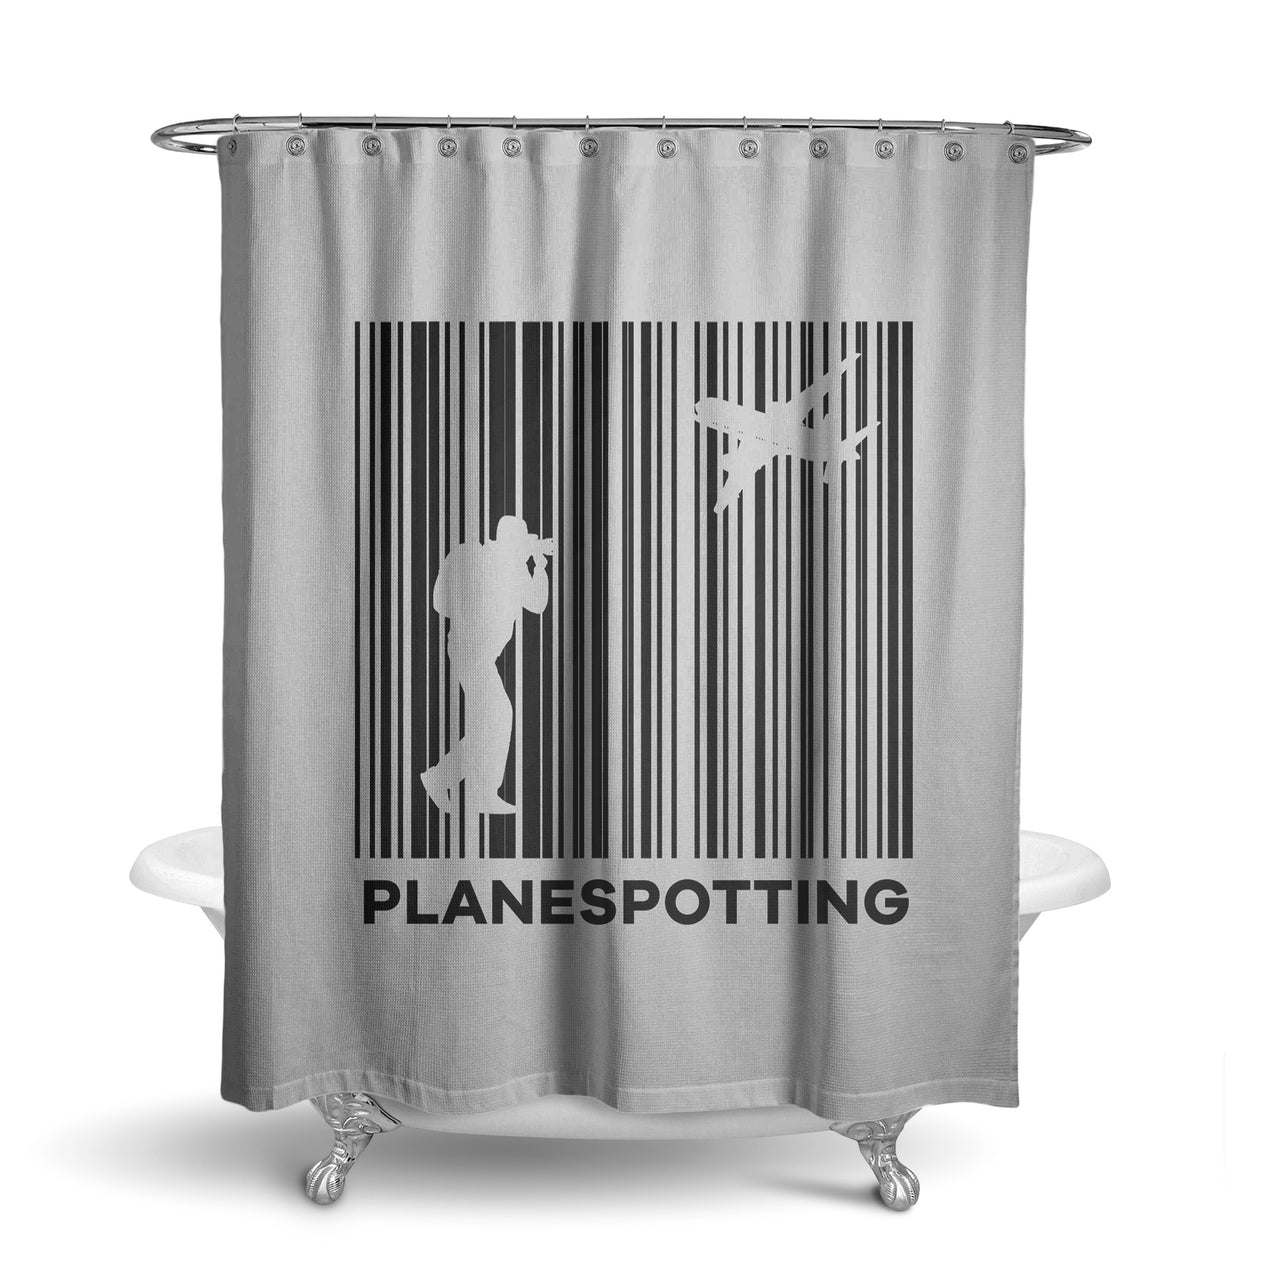 Planespotting Designed Shower Curtains